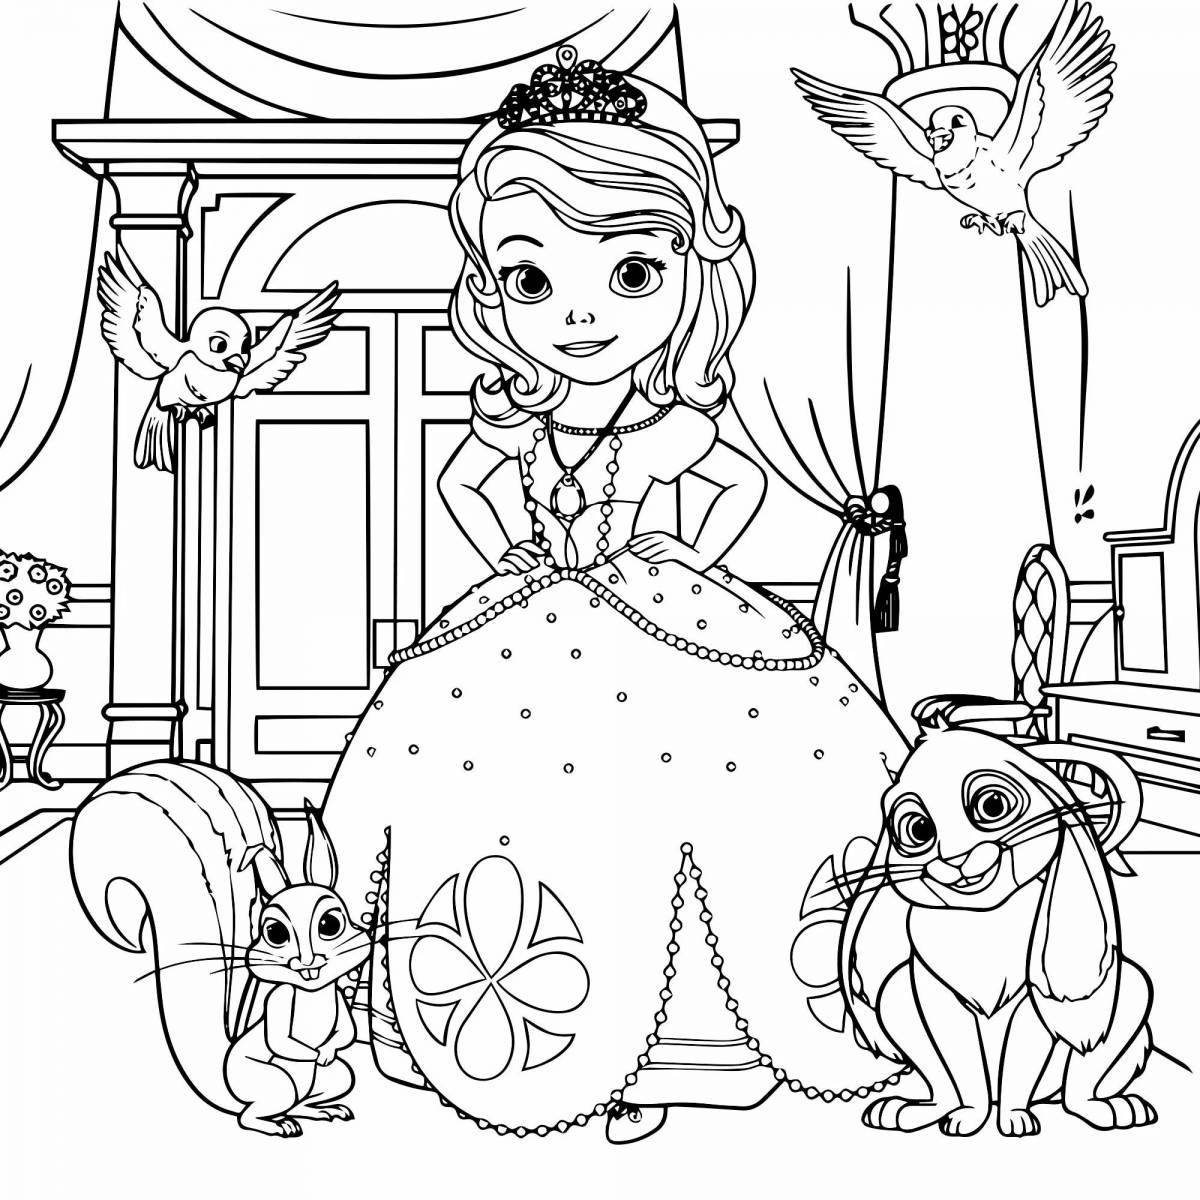 Dazzling princess sofia coloring book for kids